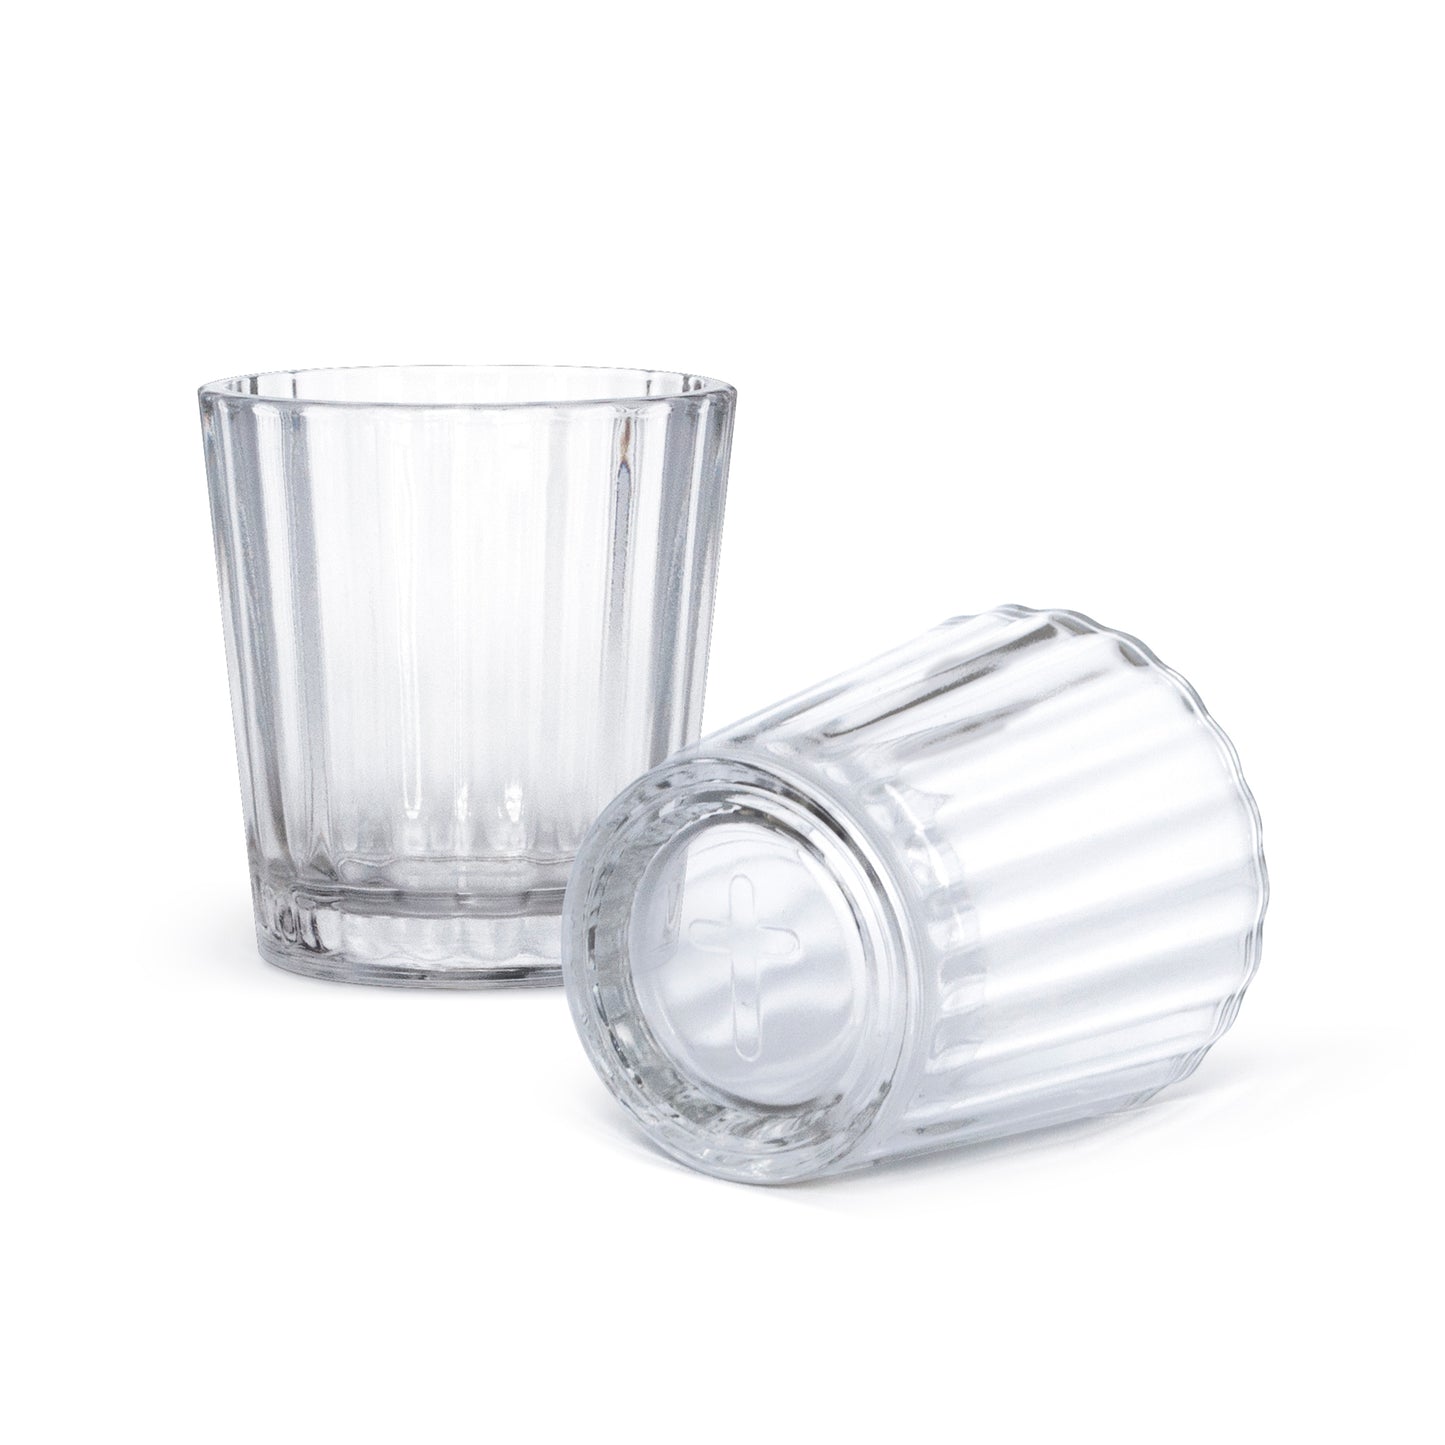 VELADORA MEZCAL GLASS / 2.7oz (80ml) / PACK OF 6